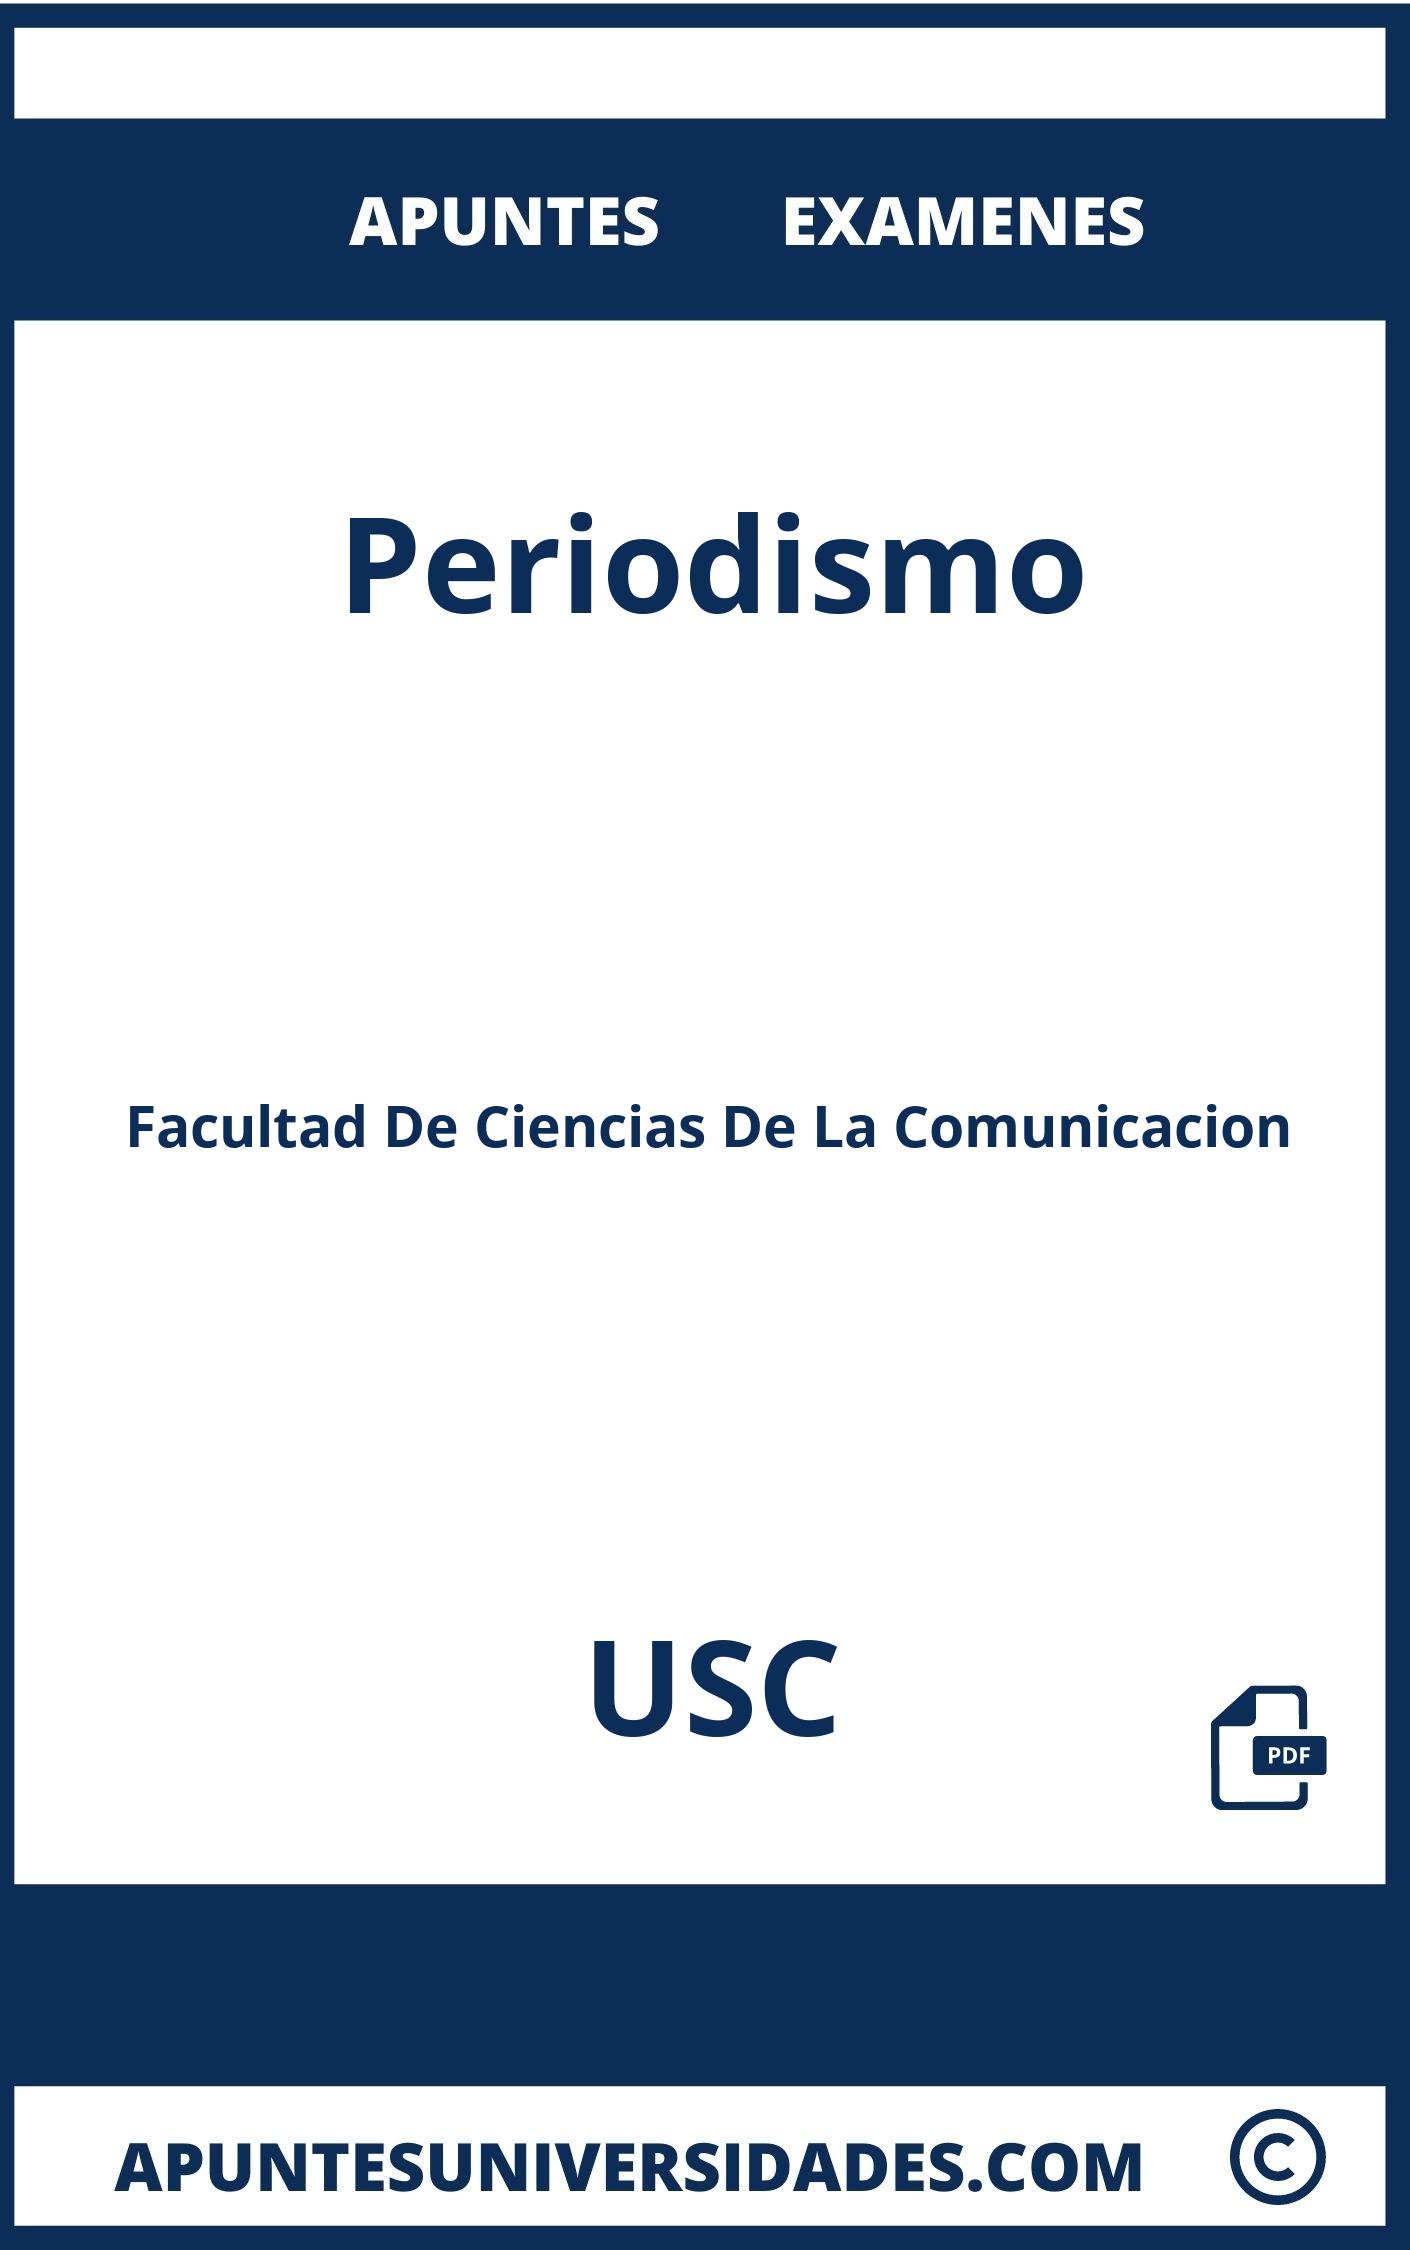 Examenes y Apuntes Periodismo USC